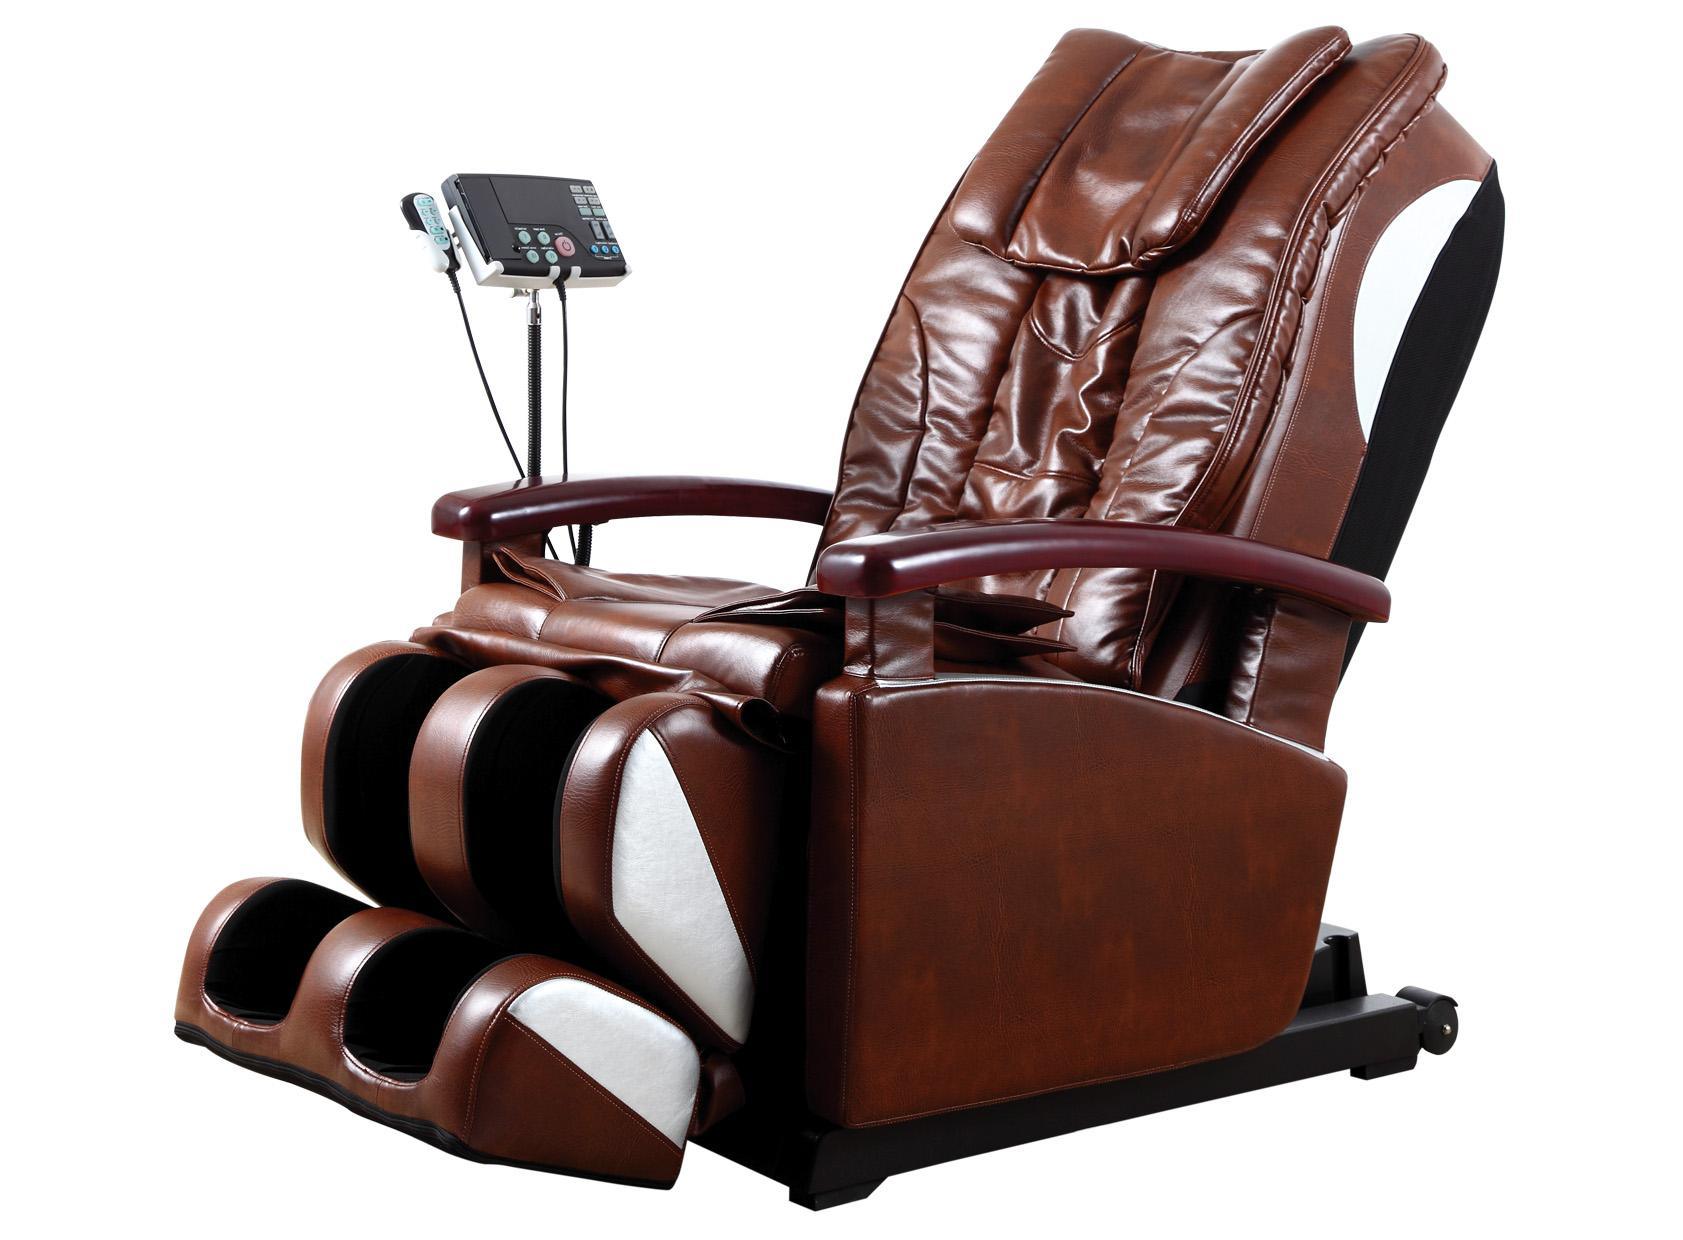 Full Airbag Massage Chair